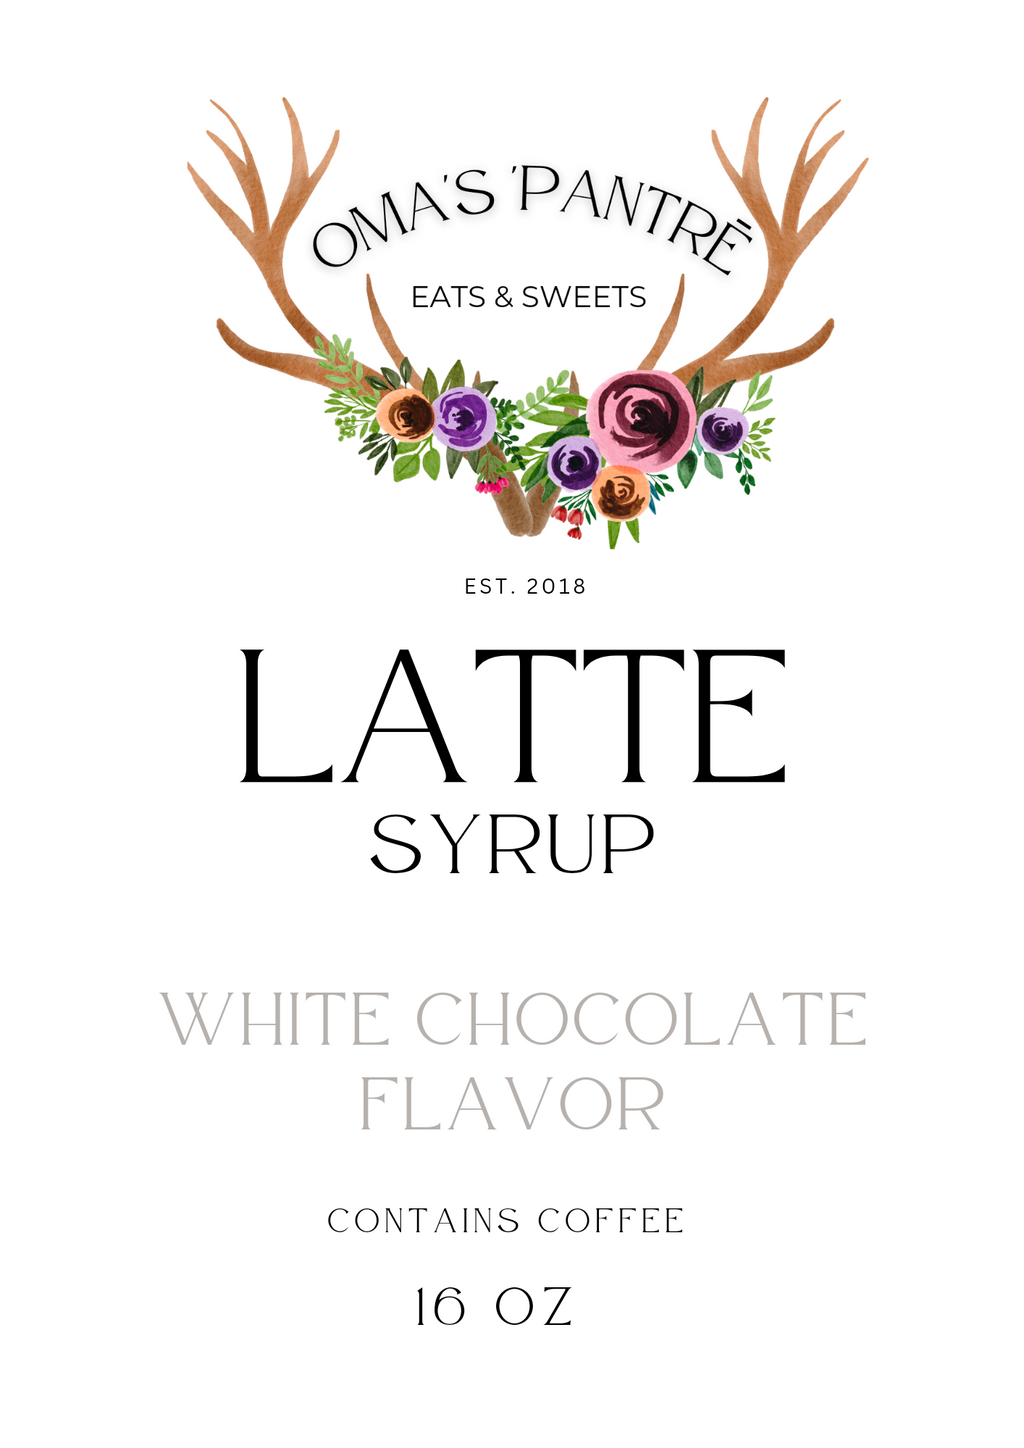 Oma's 'pantre - Eats & Sweets - Latte Syrup